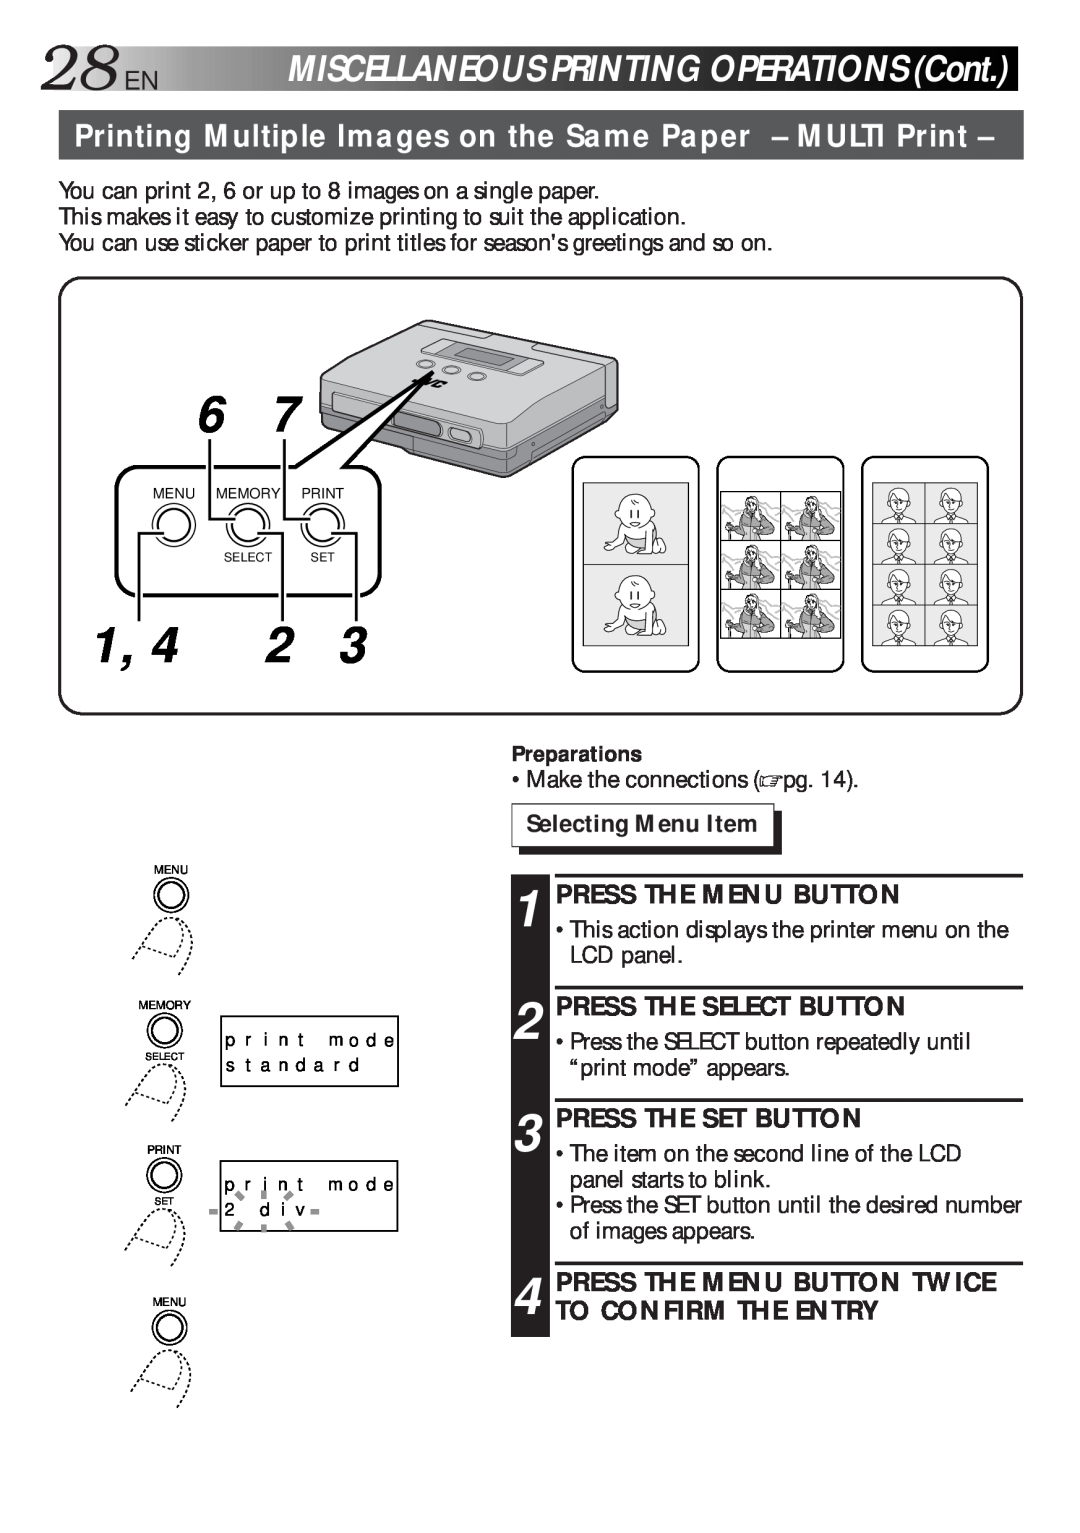 JVC GV-HT1 manual 28EN, MISCELLANEOUSPRINTINGOPERATIONSCont, Printing Multiple Images on the Same Paper - MULTI Print 